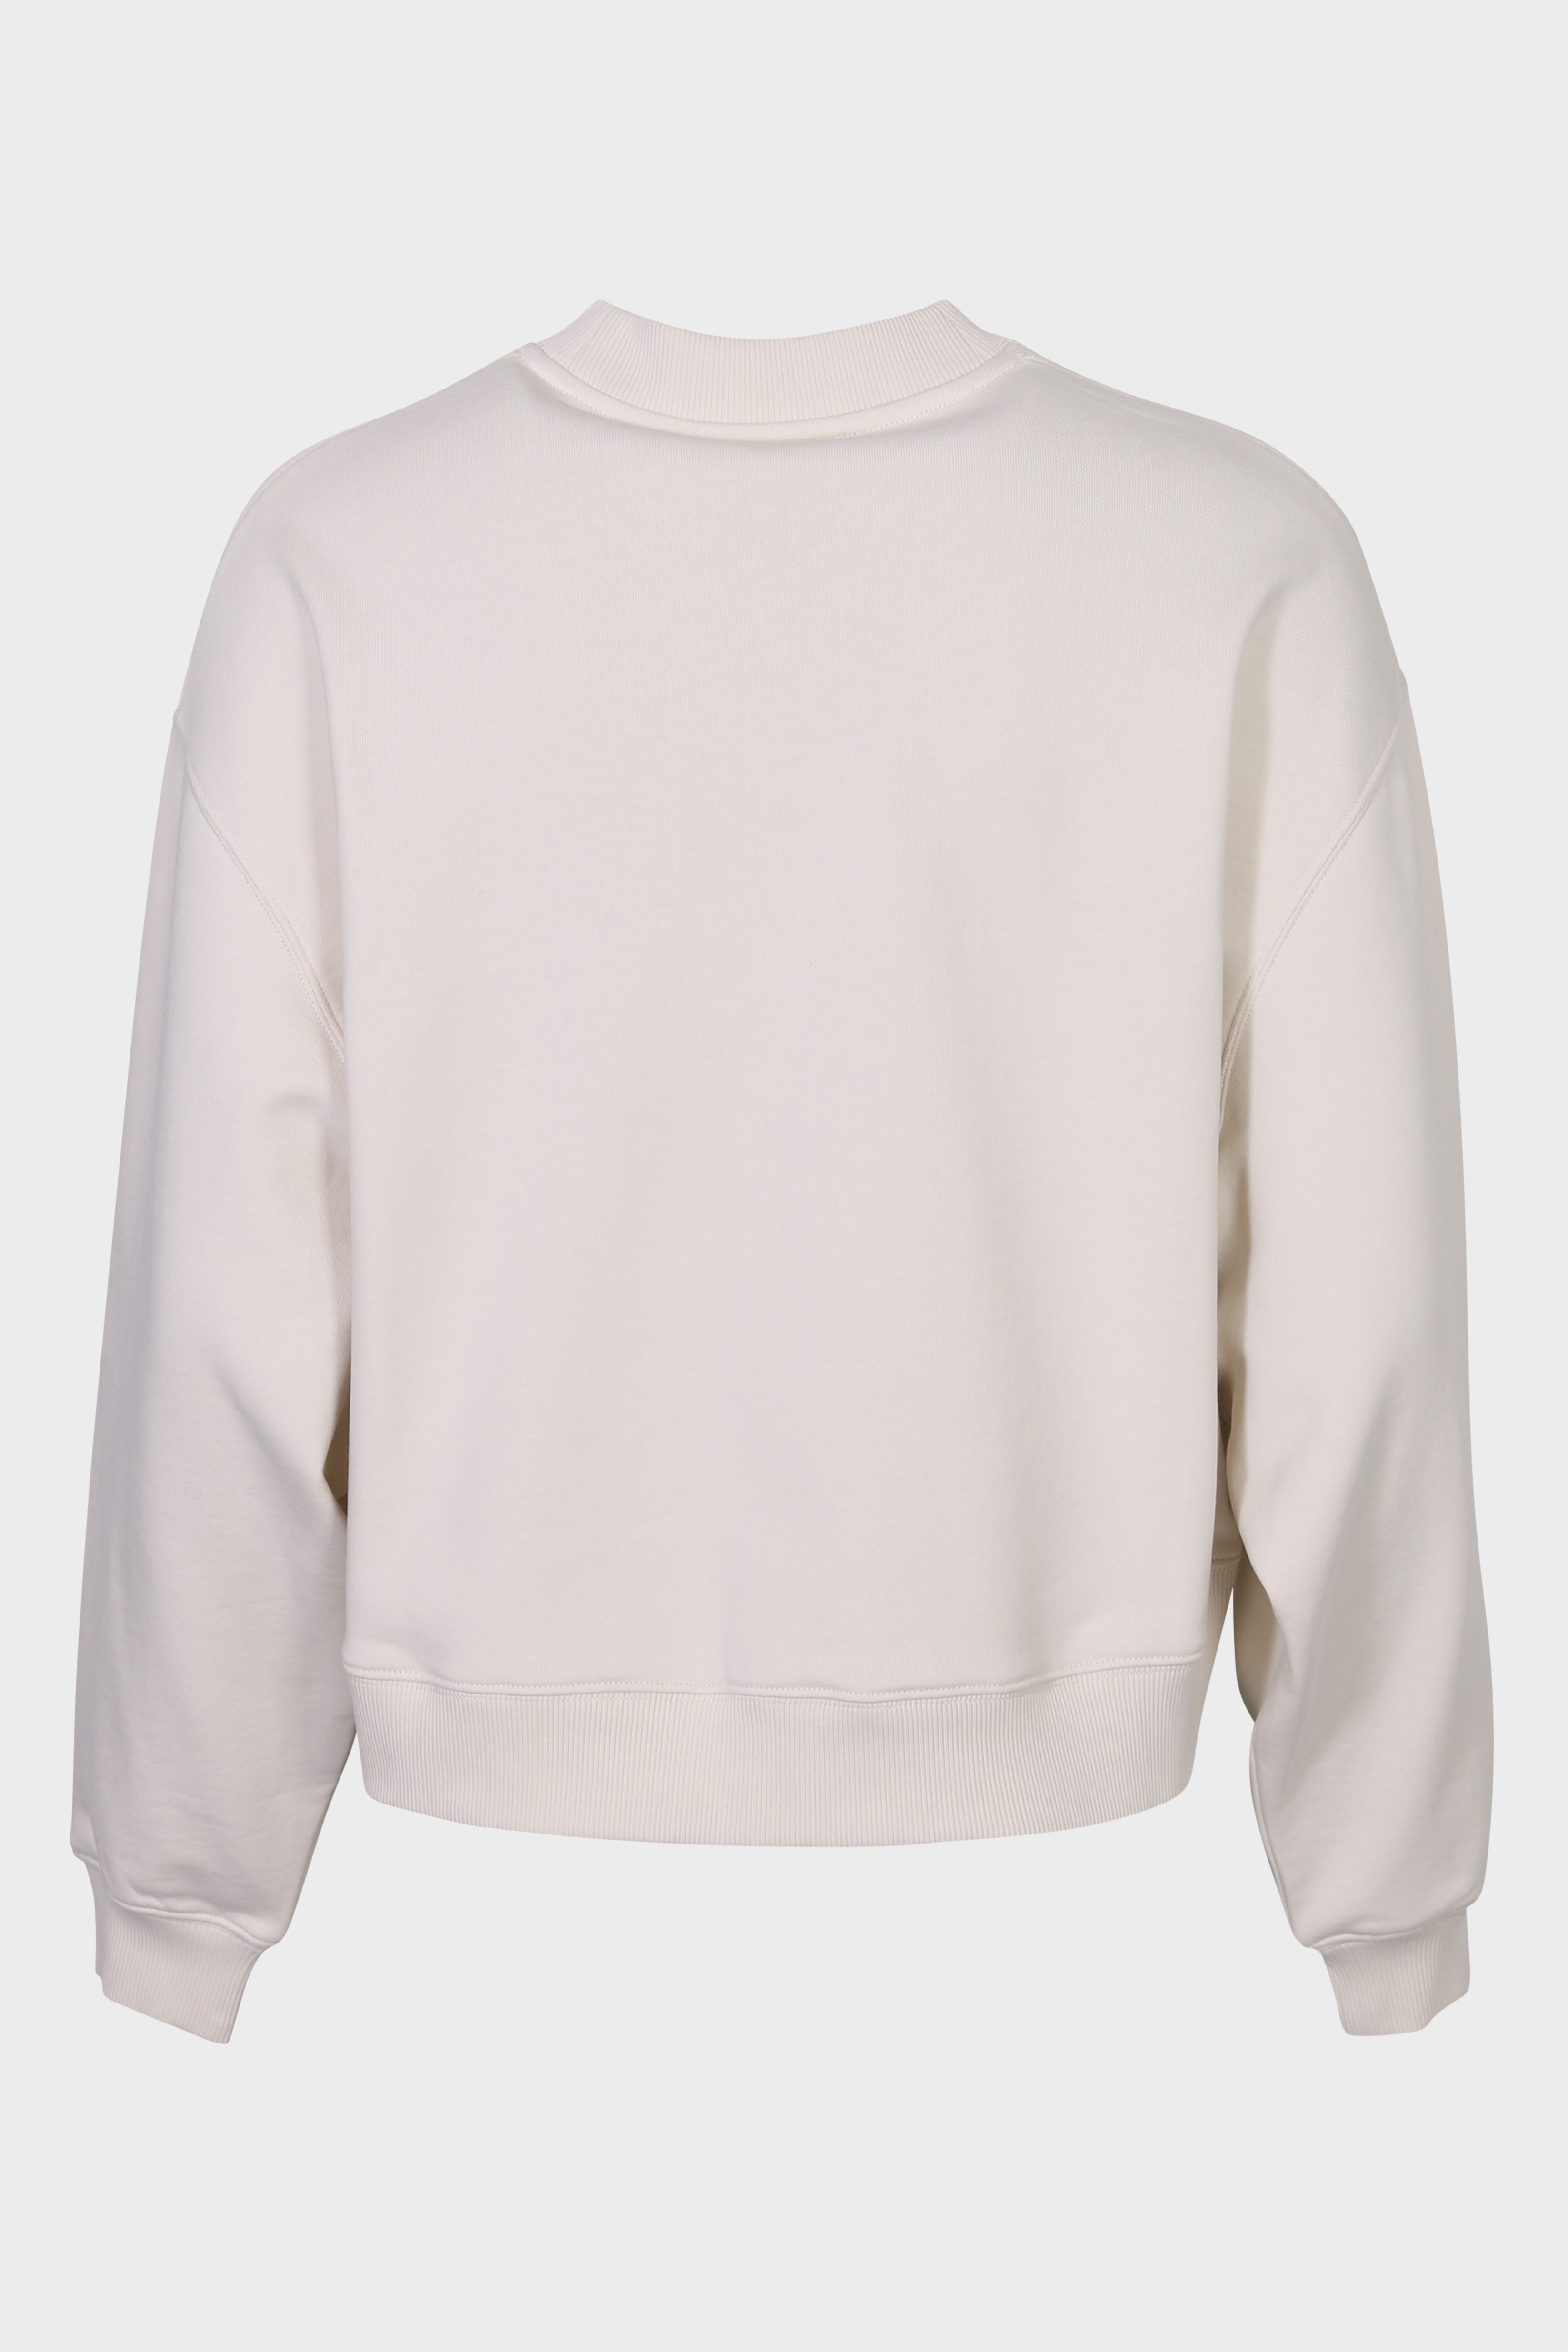 AXEL ARIGATO Legacy Sweatshirt in Off White XS